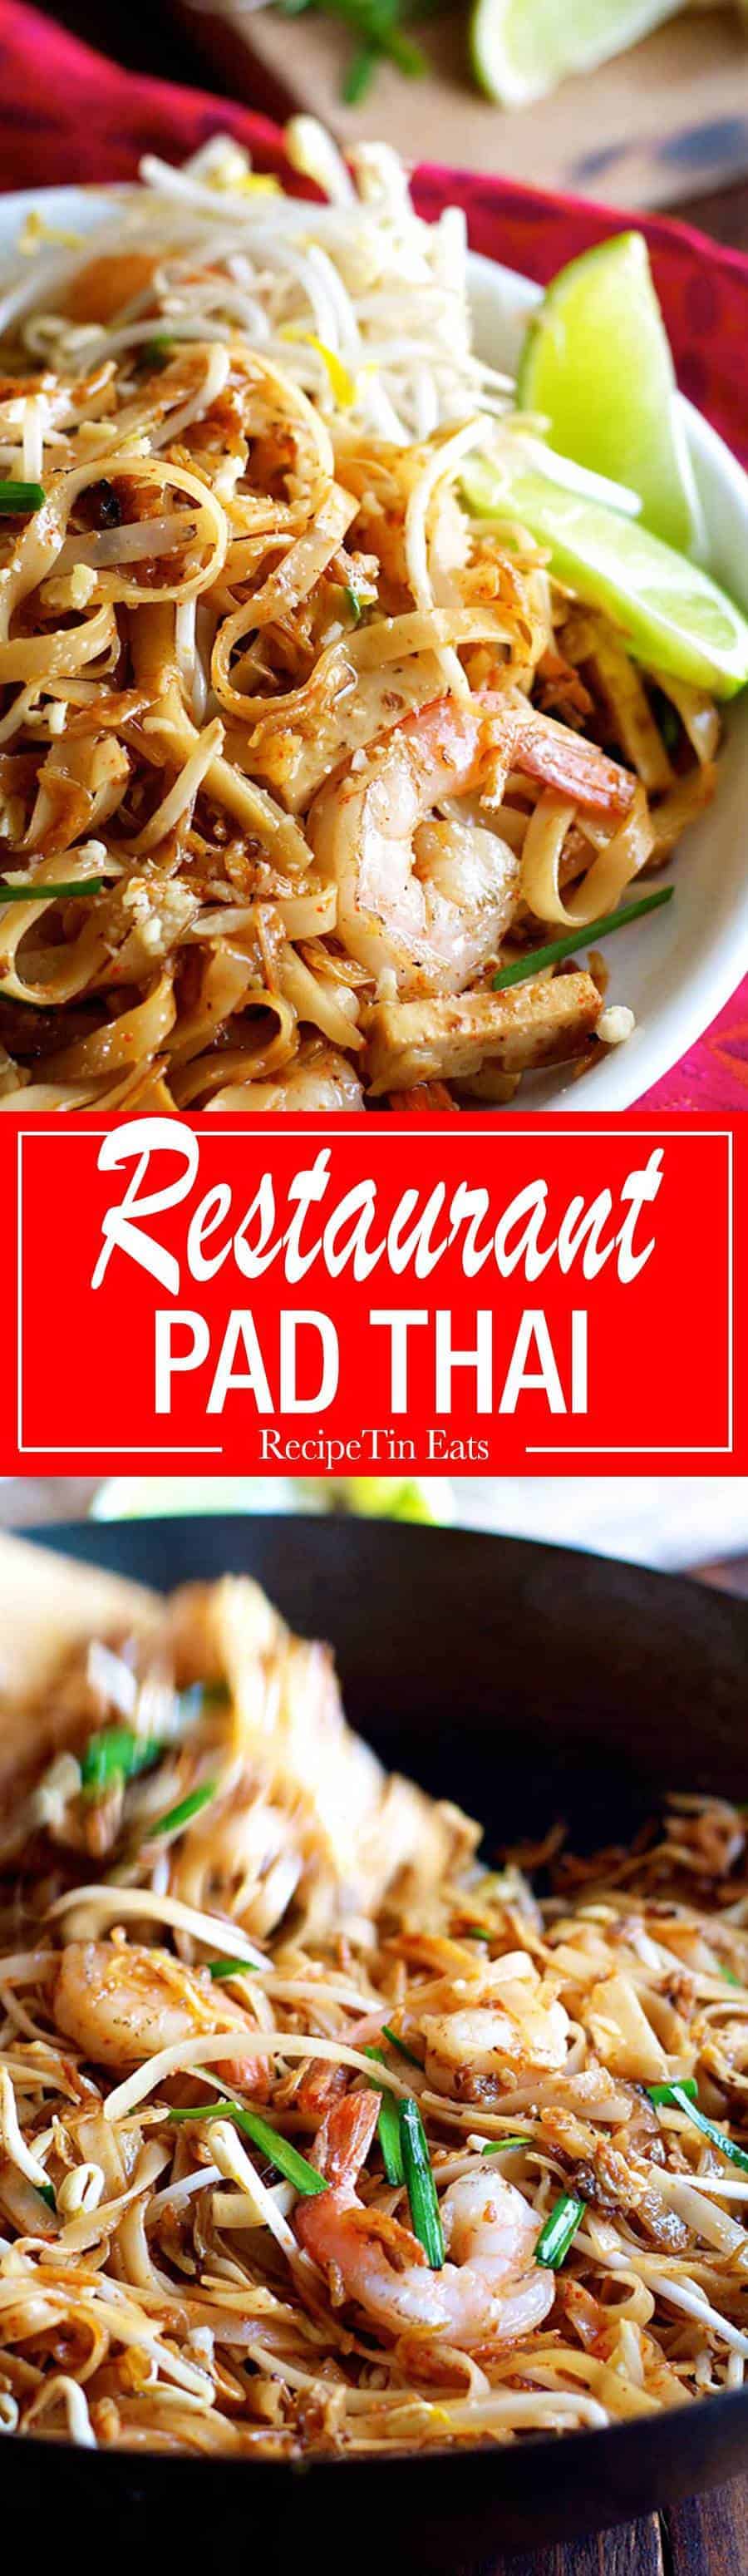 Finally! A Pad Thai recipe that ACTUALLY tastes like what you get at restaurants! Sooooo good, everyone scoffed this down!